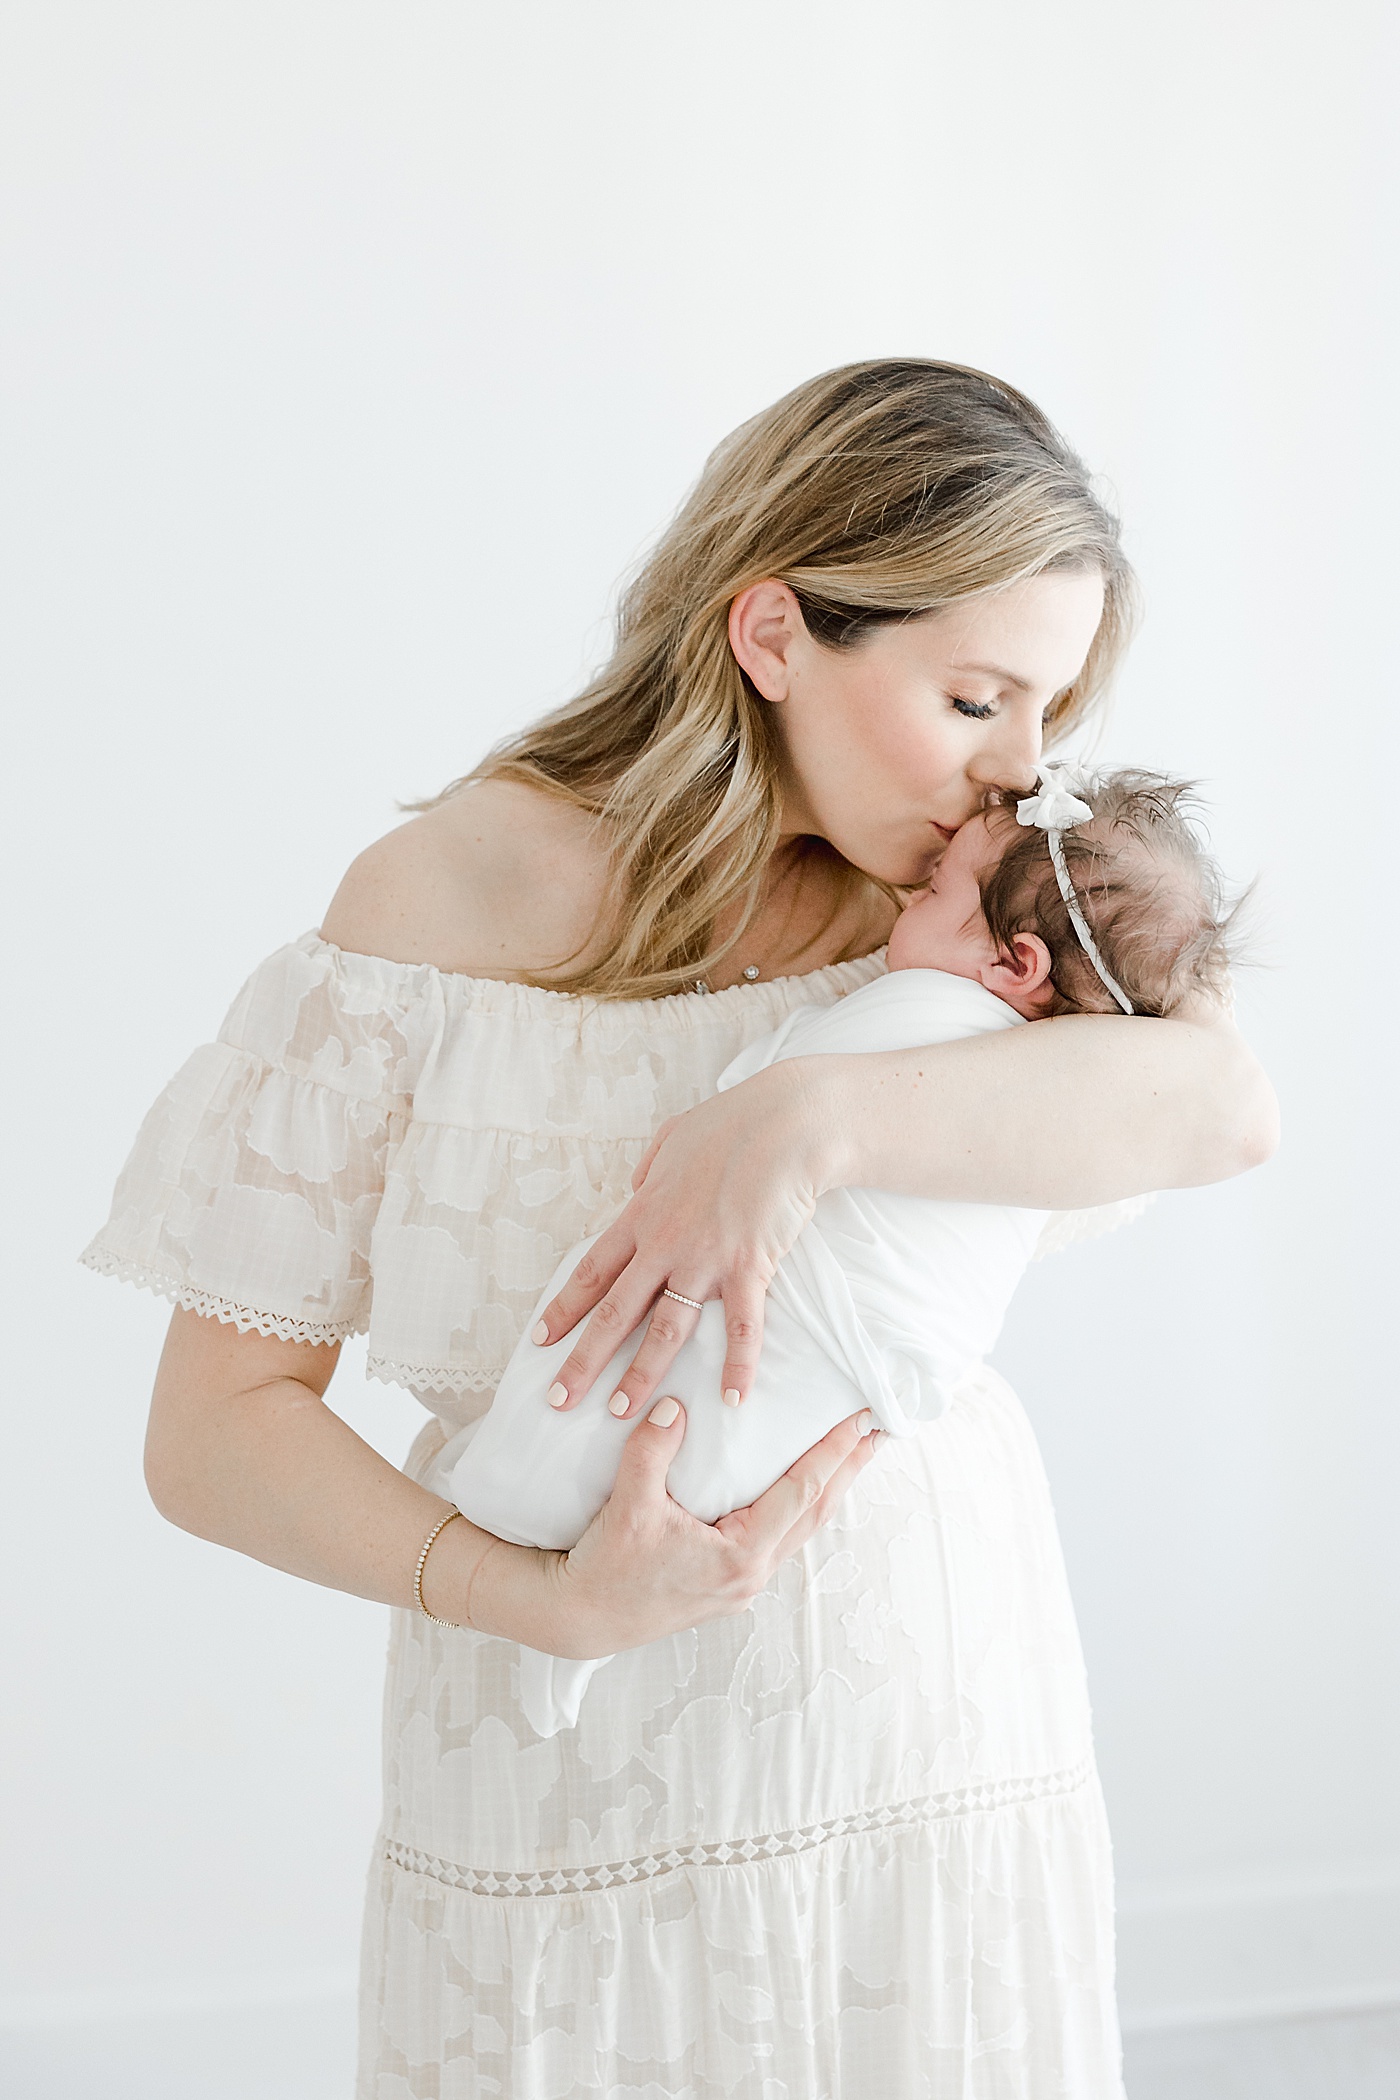 Studio newborn photos in Westport, CT | Kristin Wood Photography